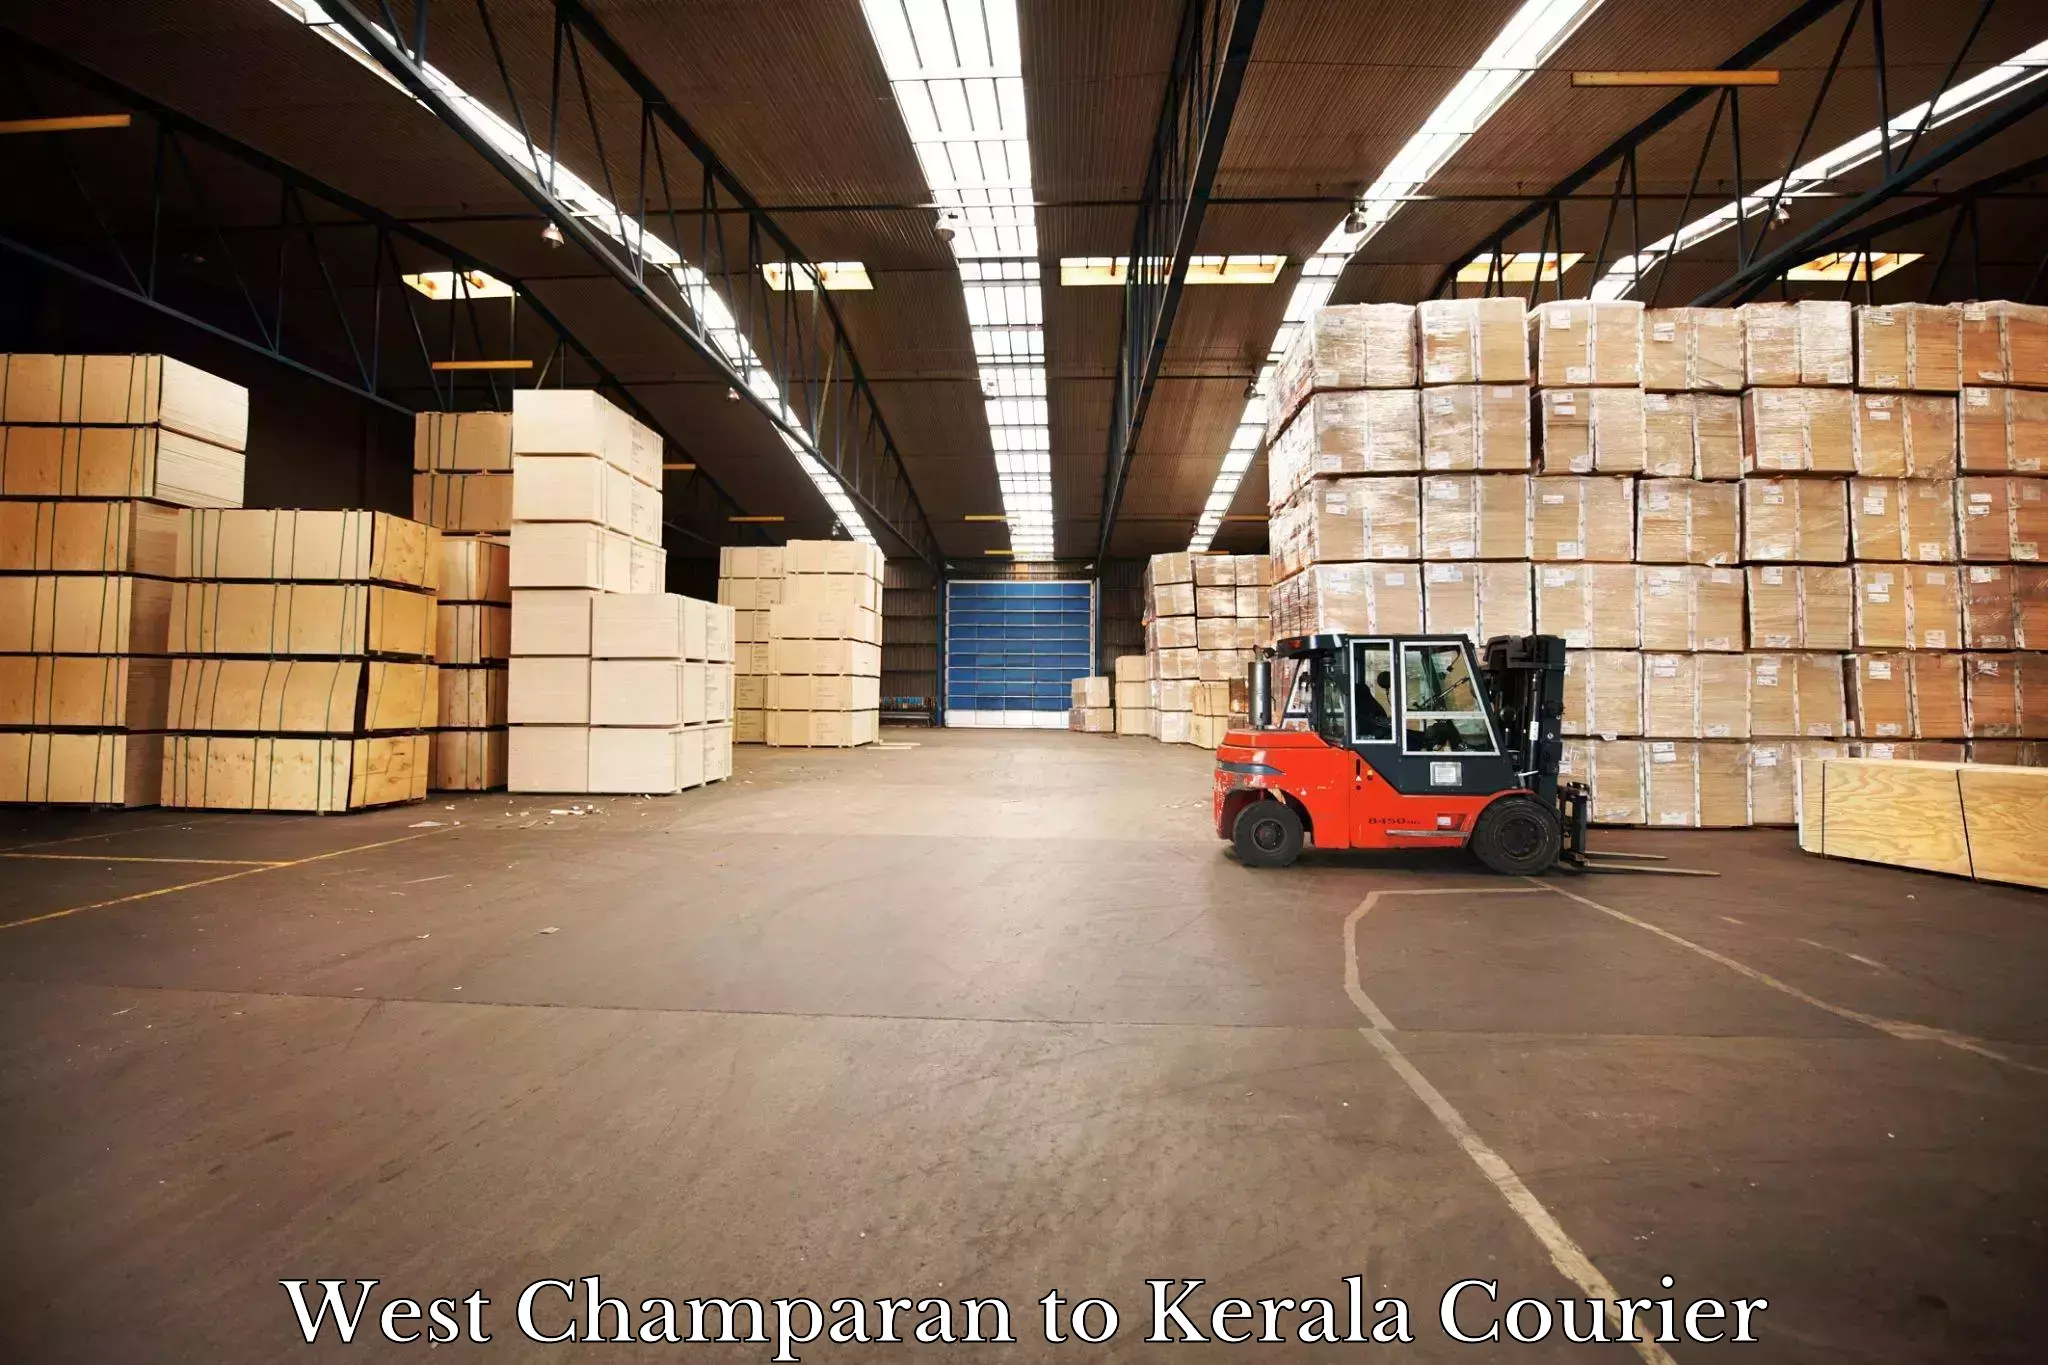 Global logistics network West Champaran to Kallikkad